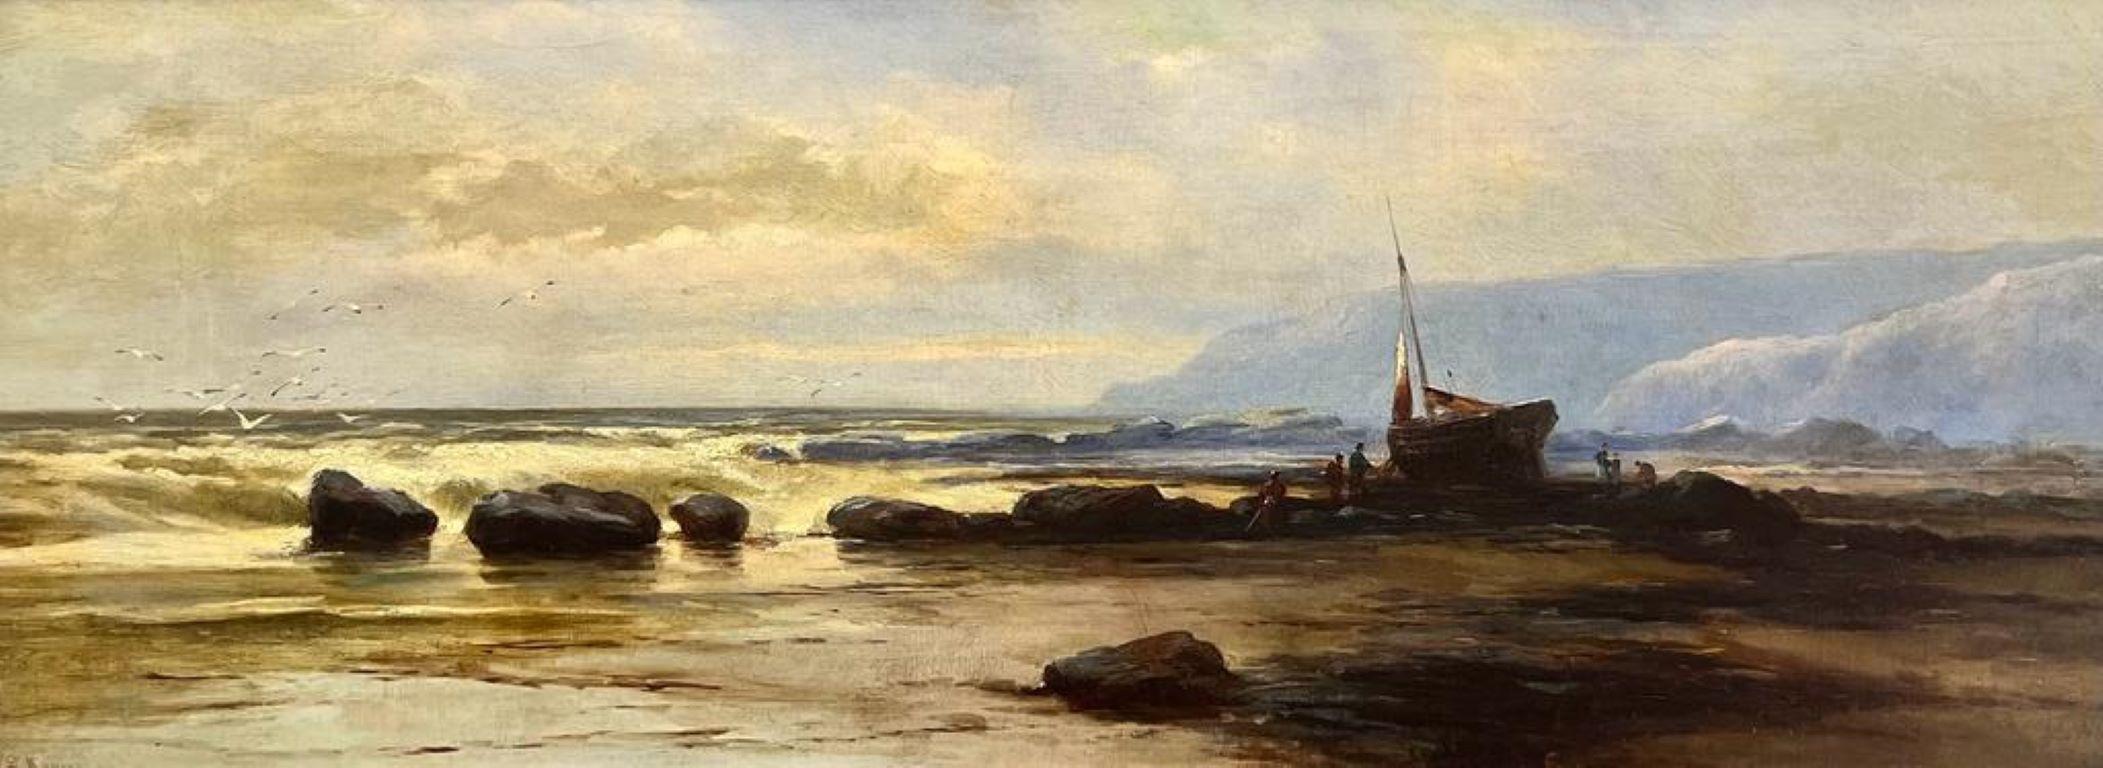 Antique English Marine Landscape Painting - Fishermen with Boats on the Windswept Coastline Shore Antique English Oil 